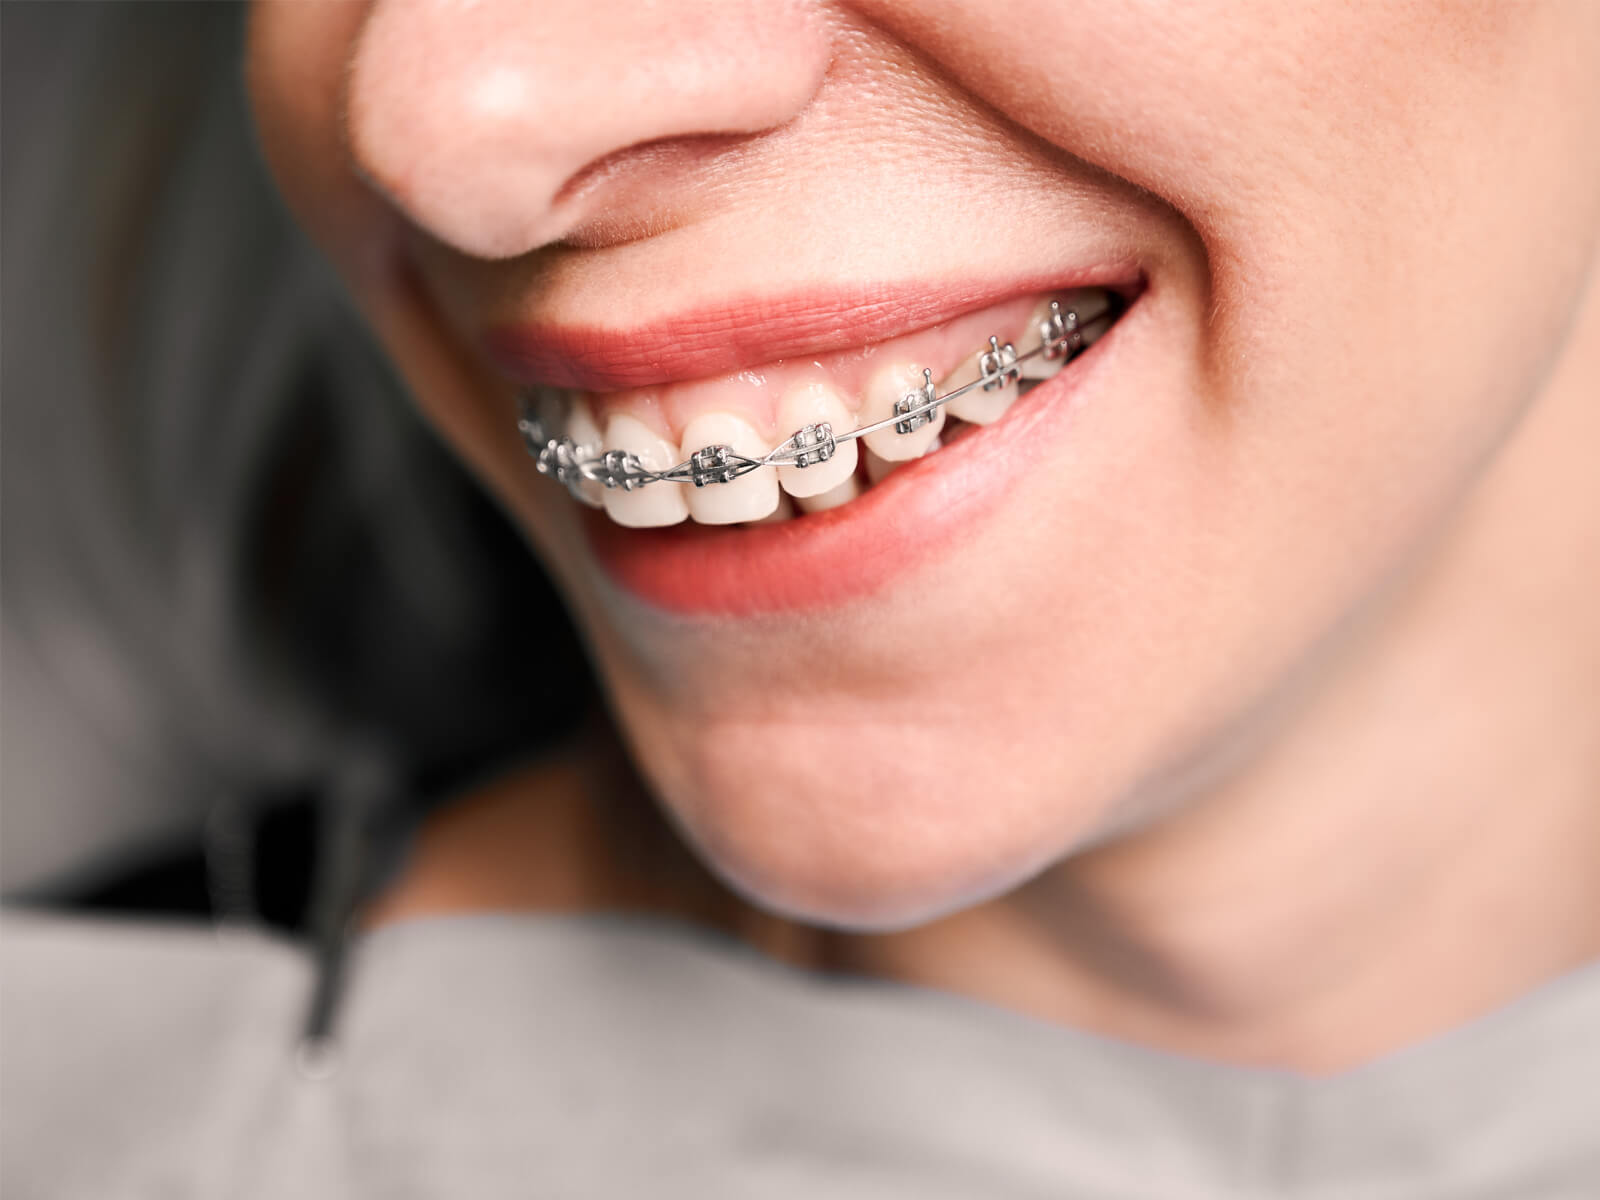 How Do Braces Work to Straighten Crooked Teeth?